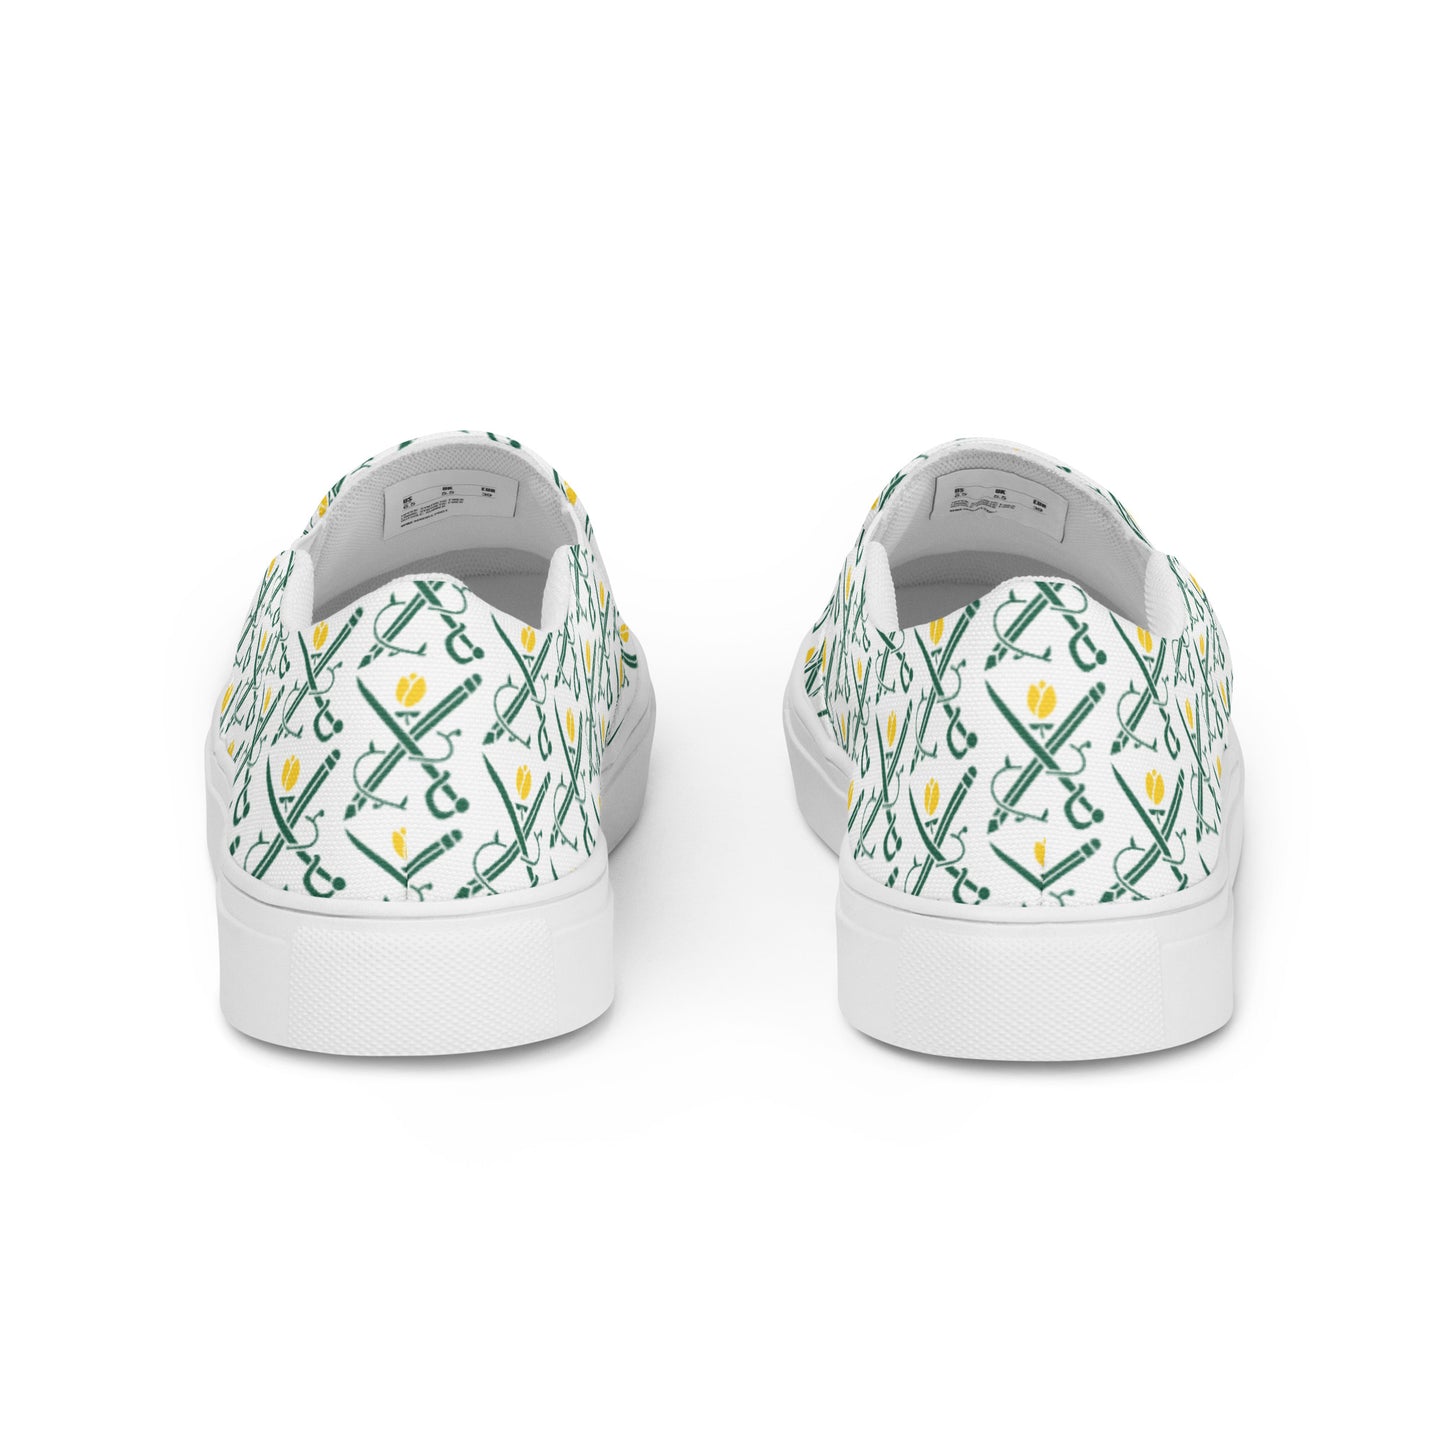 AniFem Logo Patterned Slip-On Canvas Shoes (Smaller)